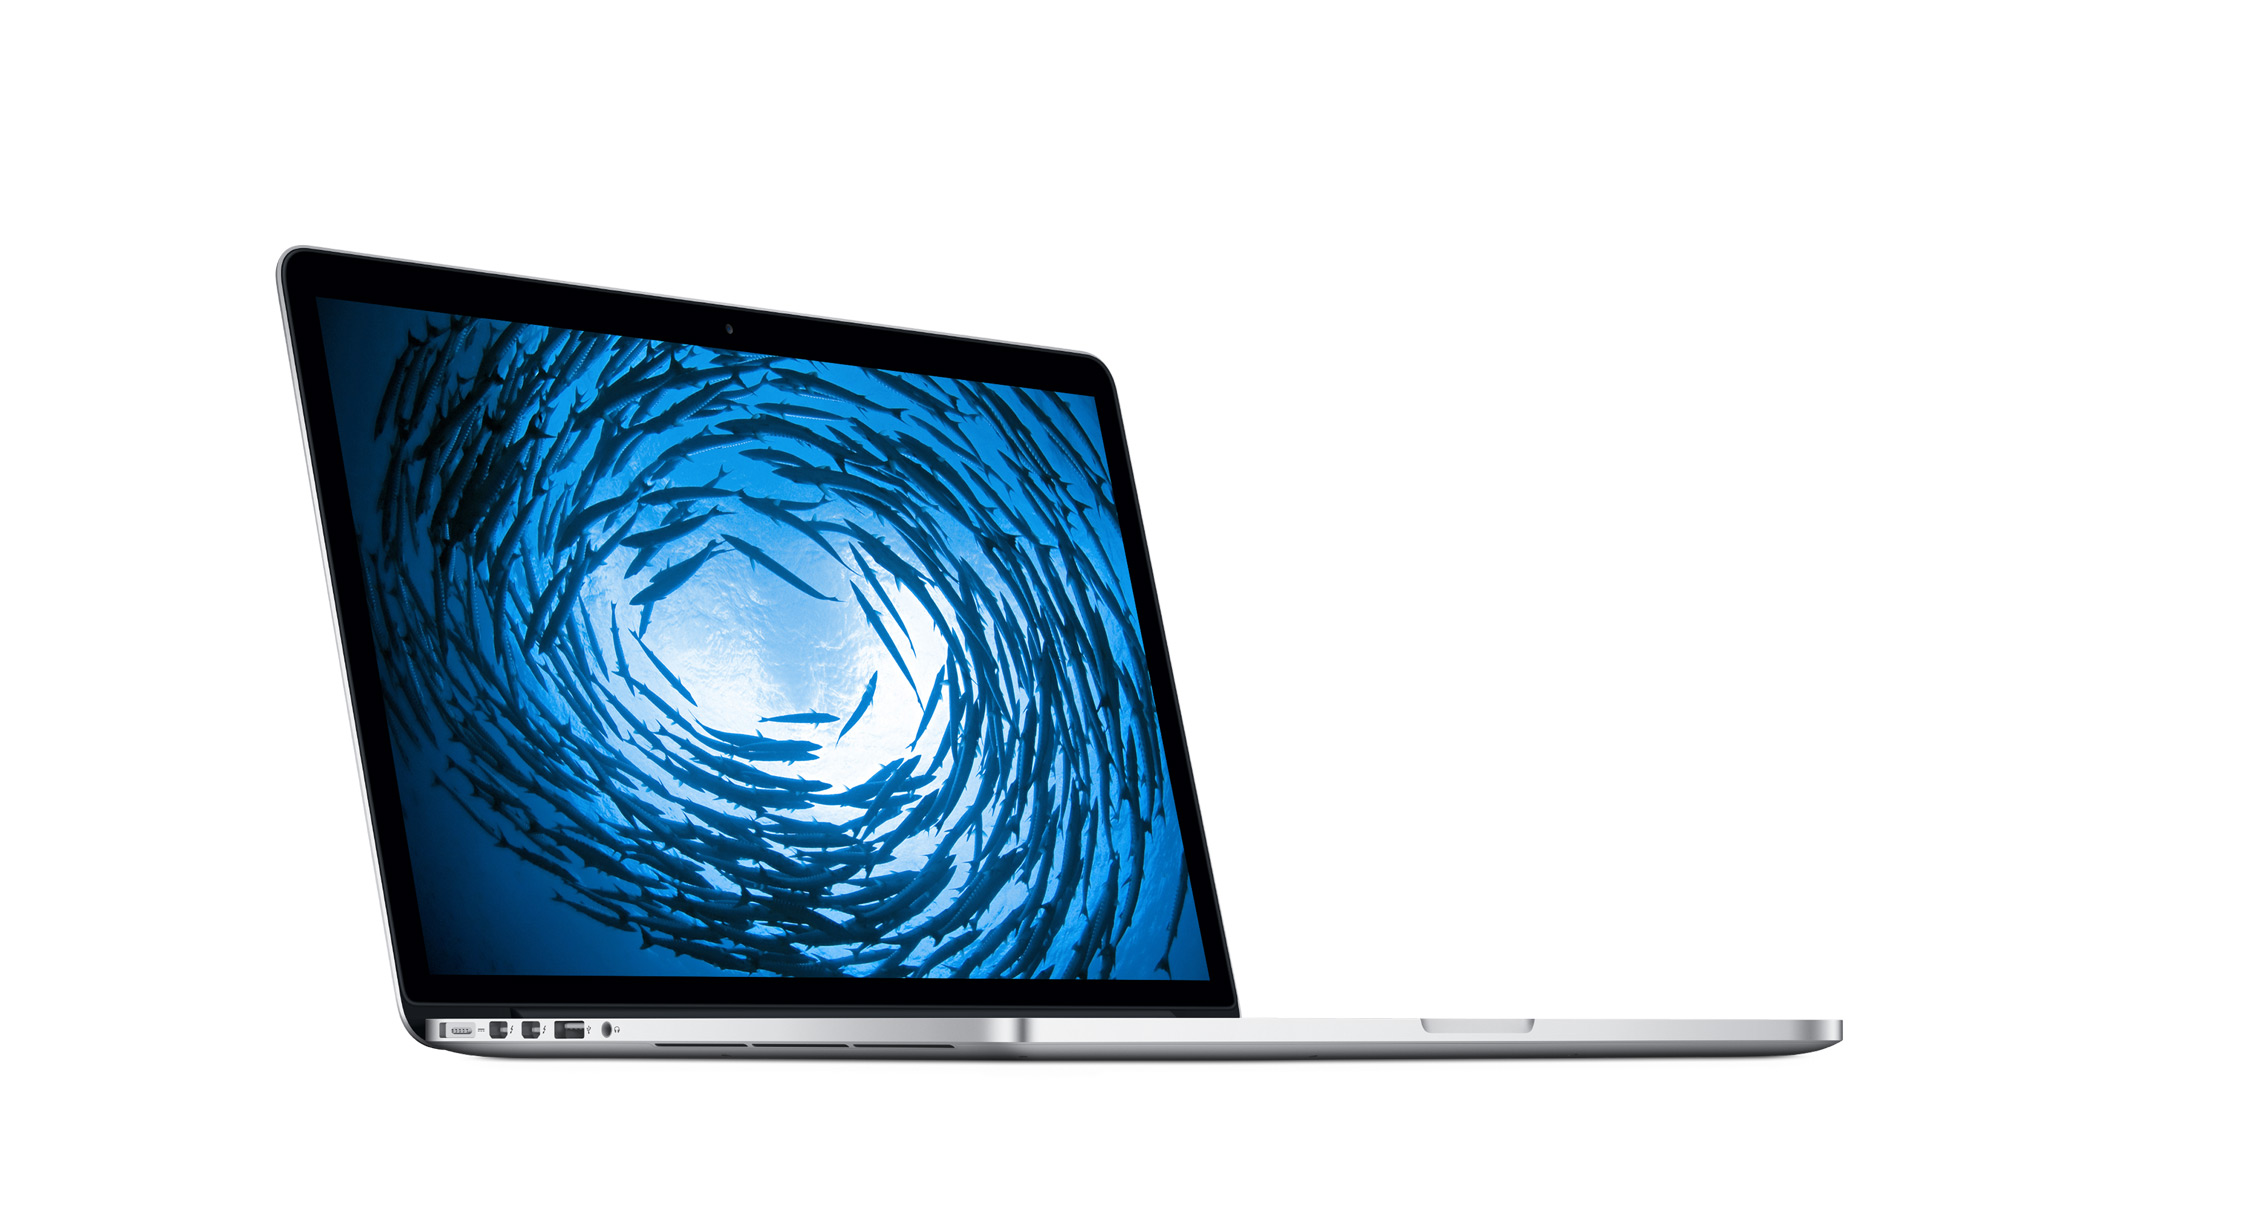  Apple MacBook Pro 15-inch Retina Display (Late 2013) Notebook